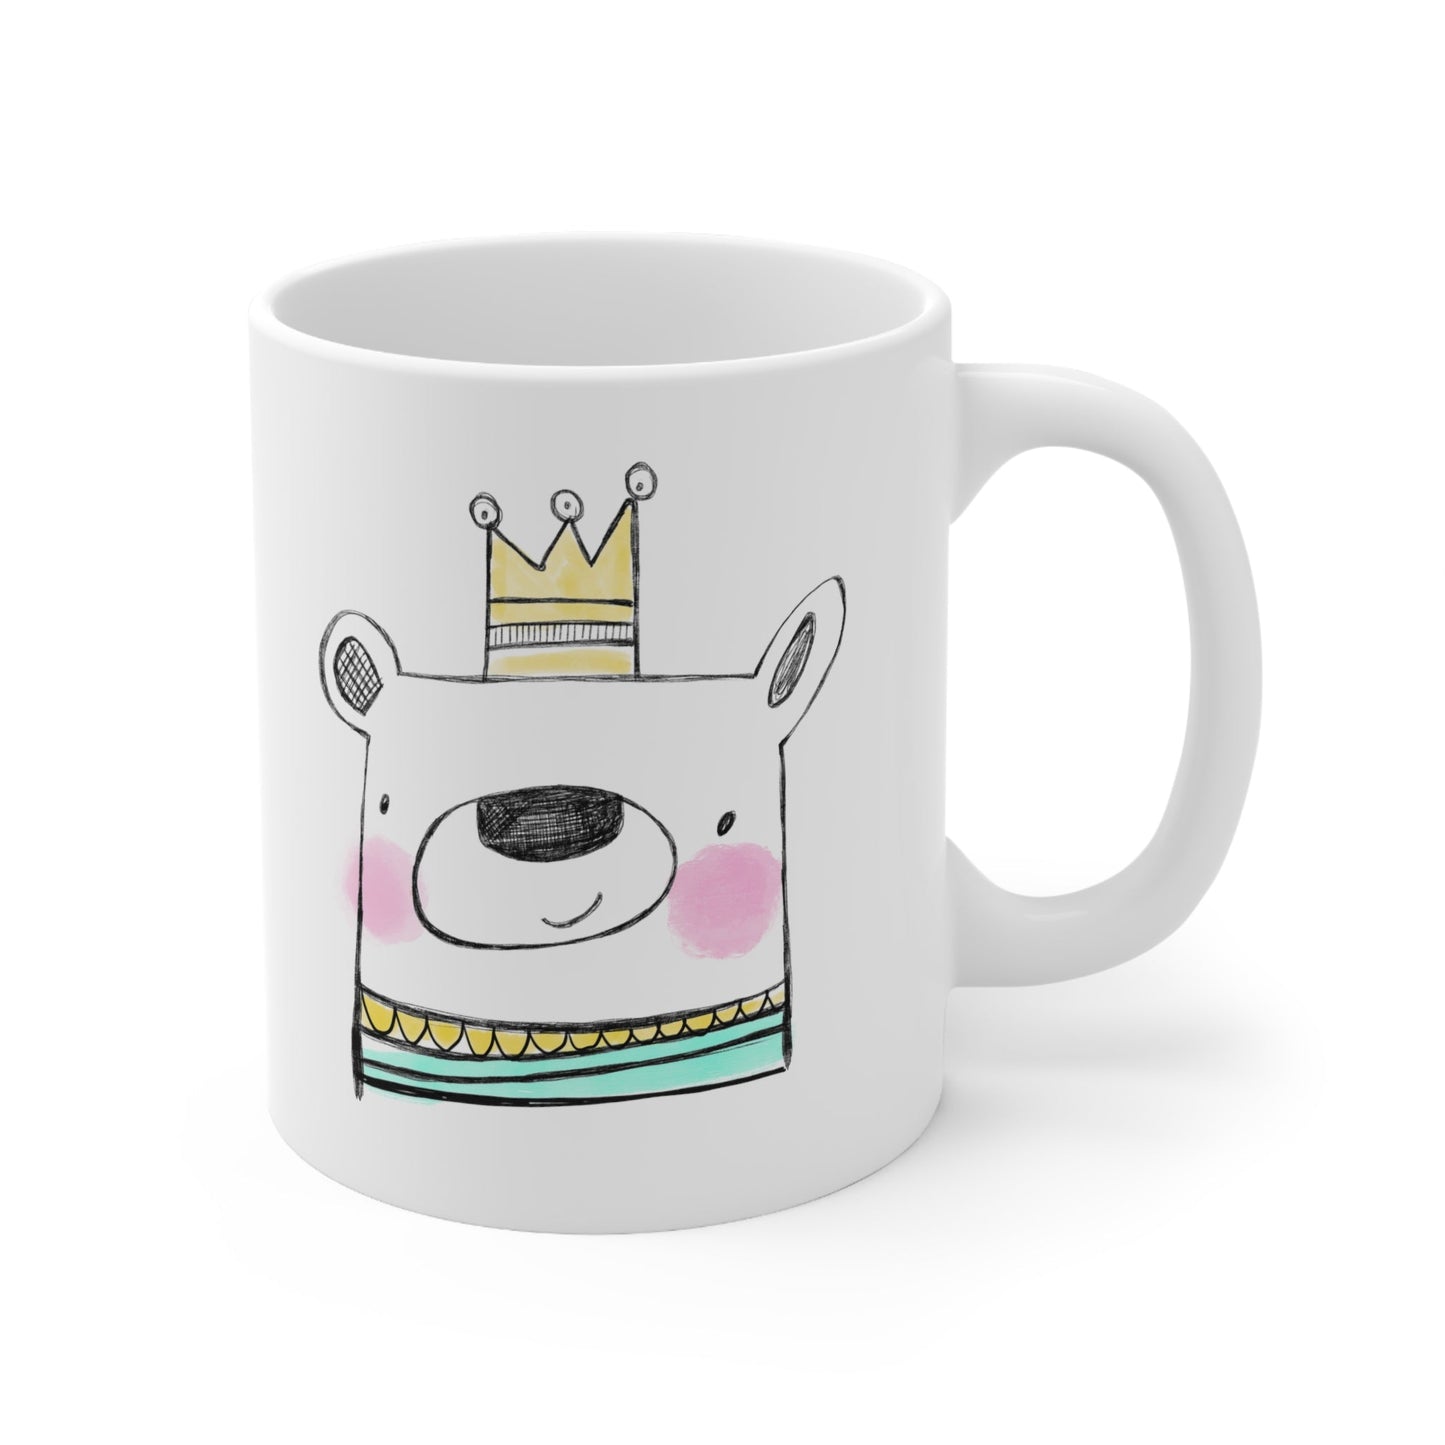 Beary princess mug - The muggin shop